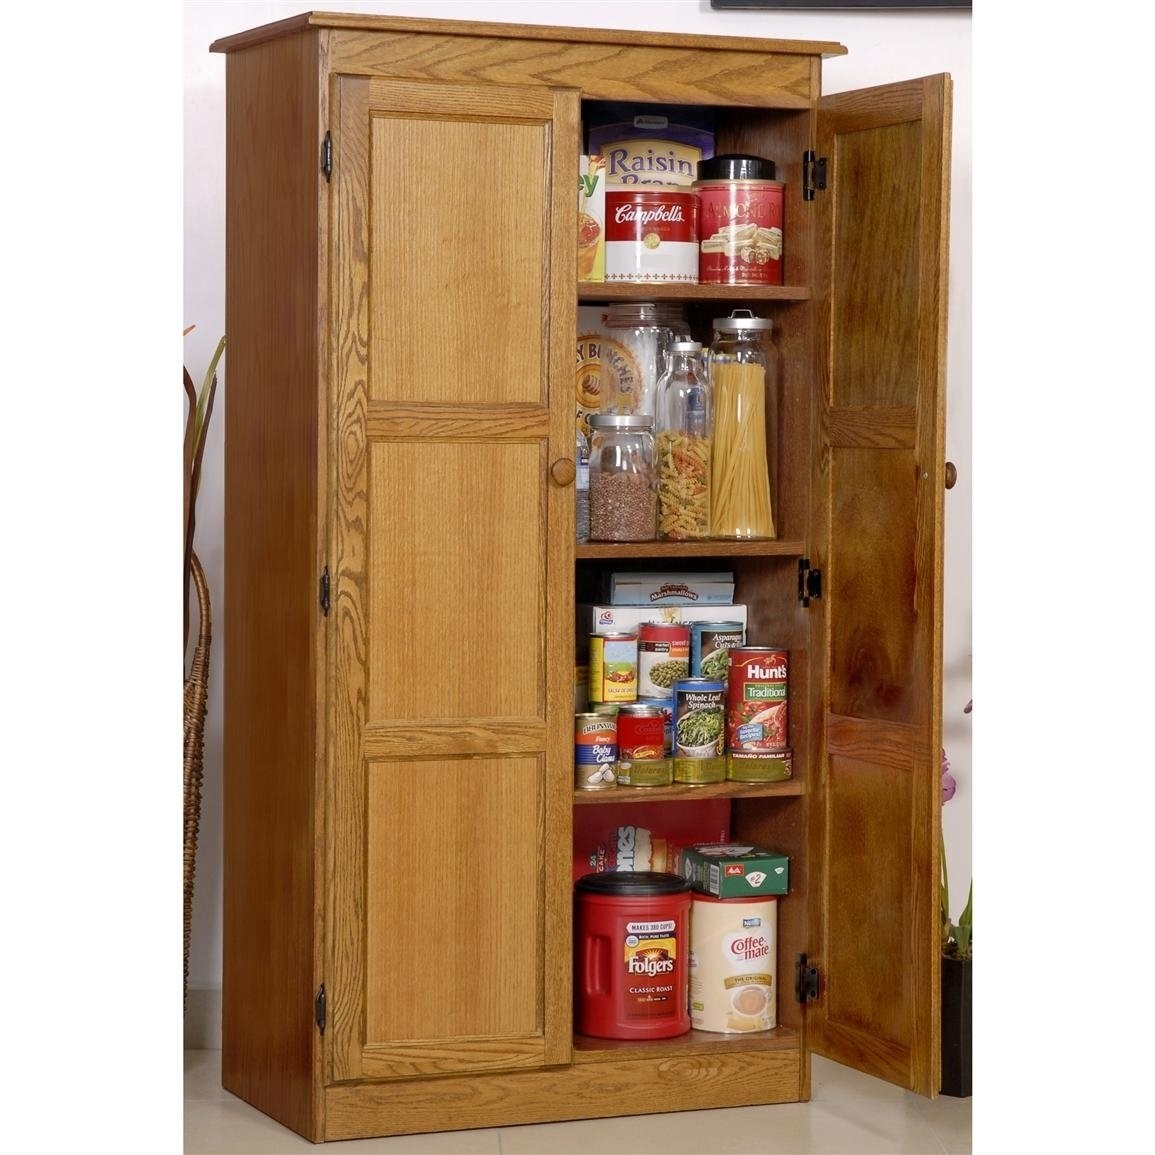 Concepts in Wood Multi-purpose Storage Cabinet